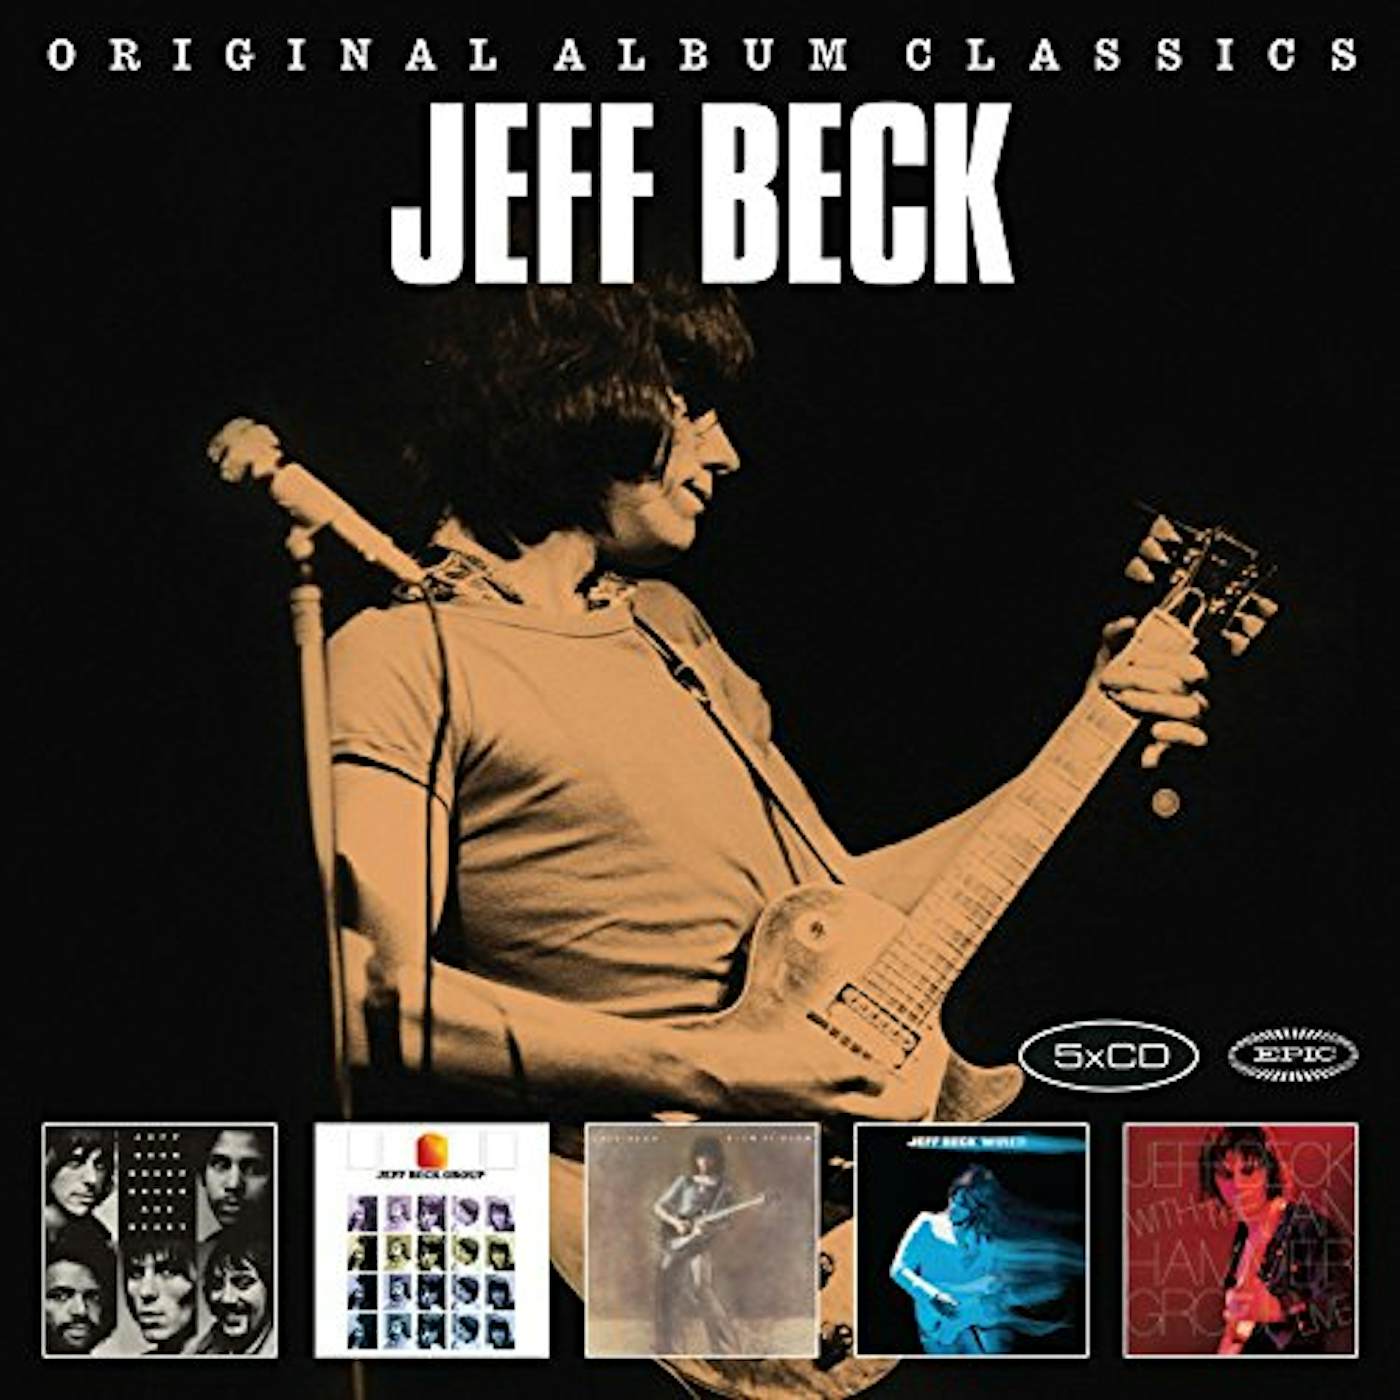 Jeff Beck ORIGINAL ALBUM CLASSICS CD